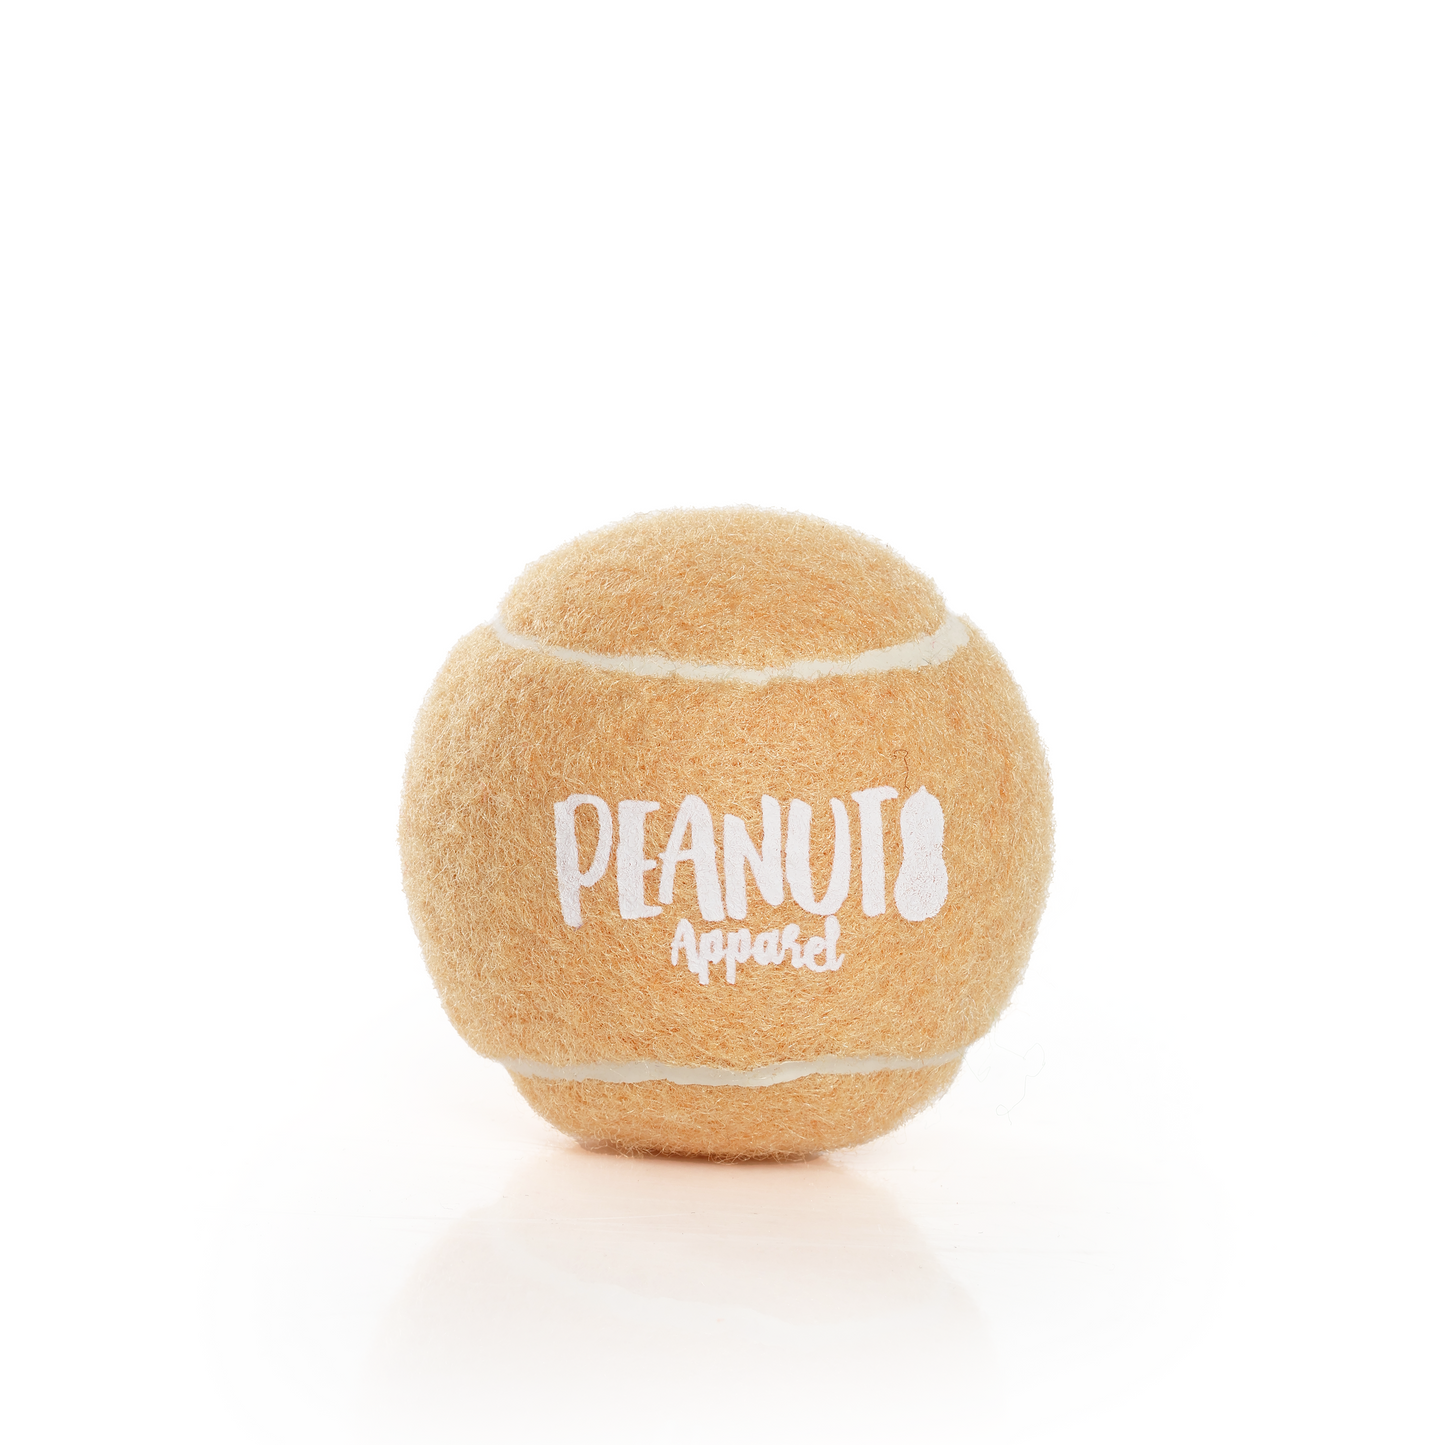 Peanut Apparel Tennis Ball